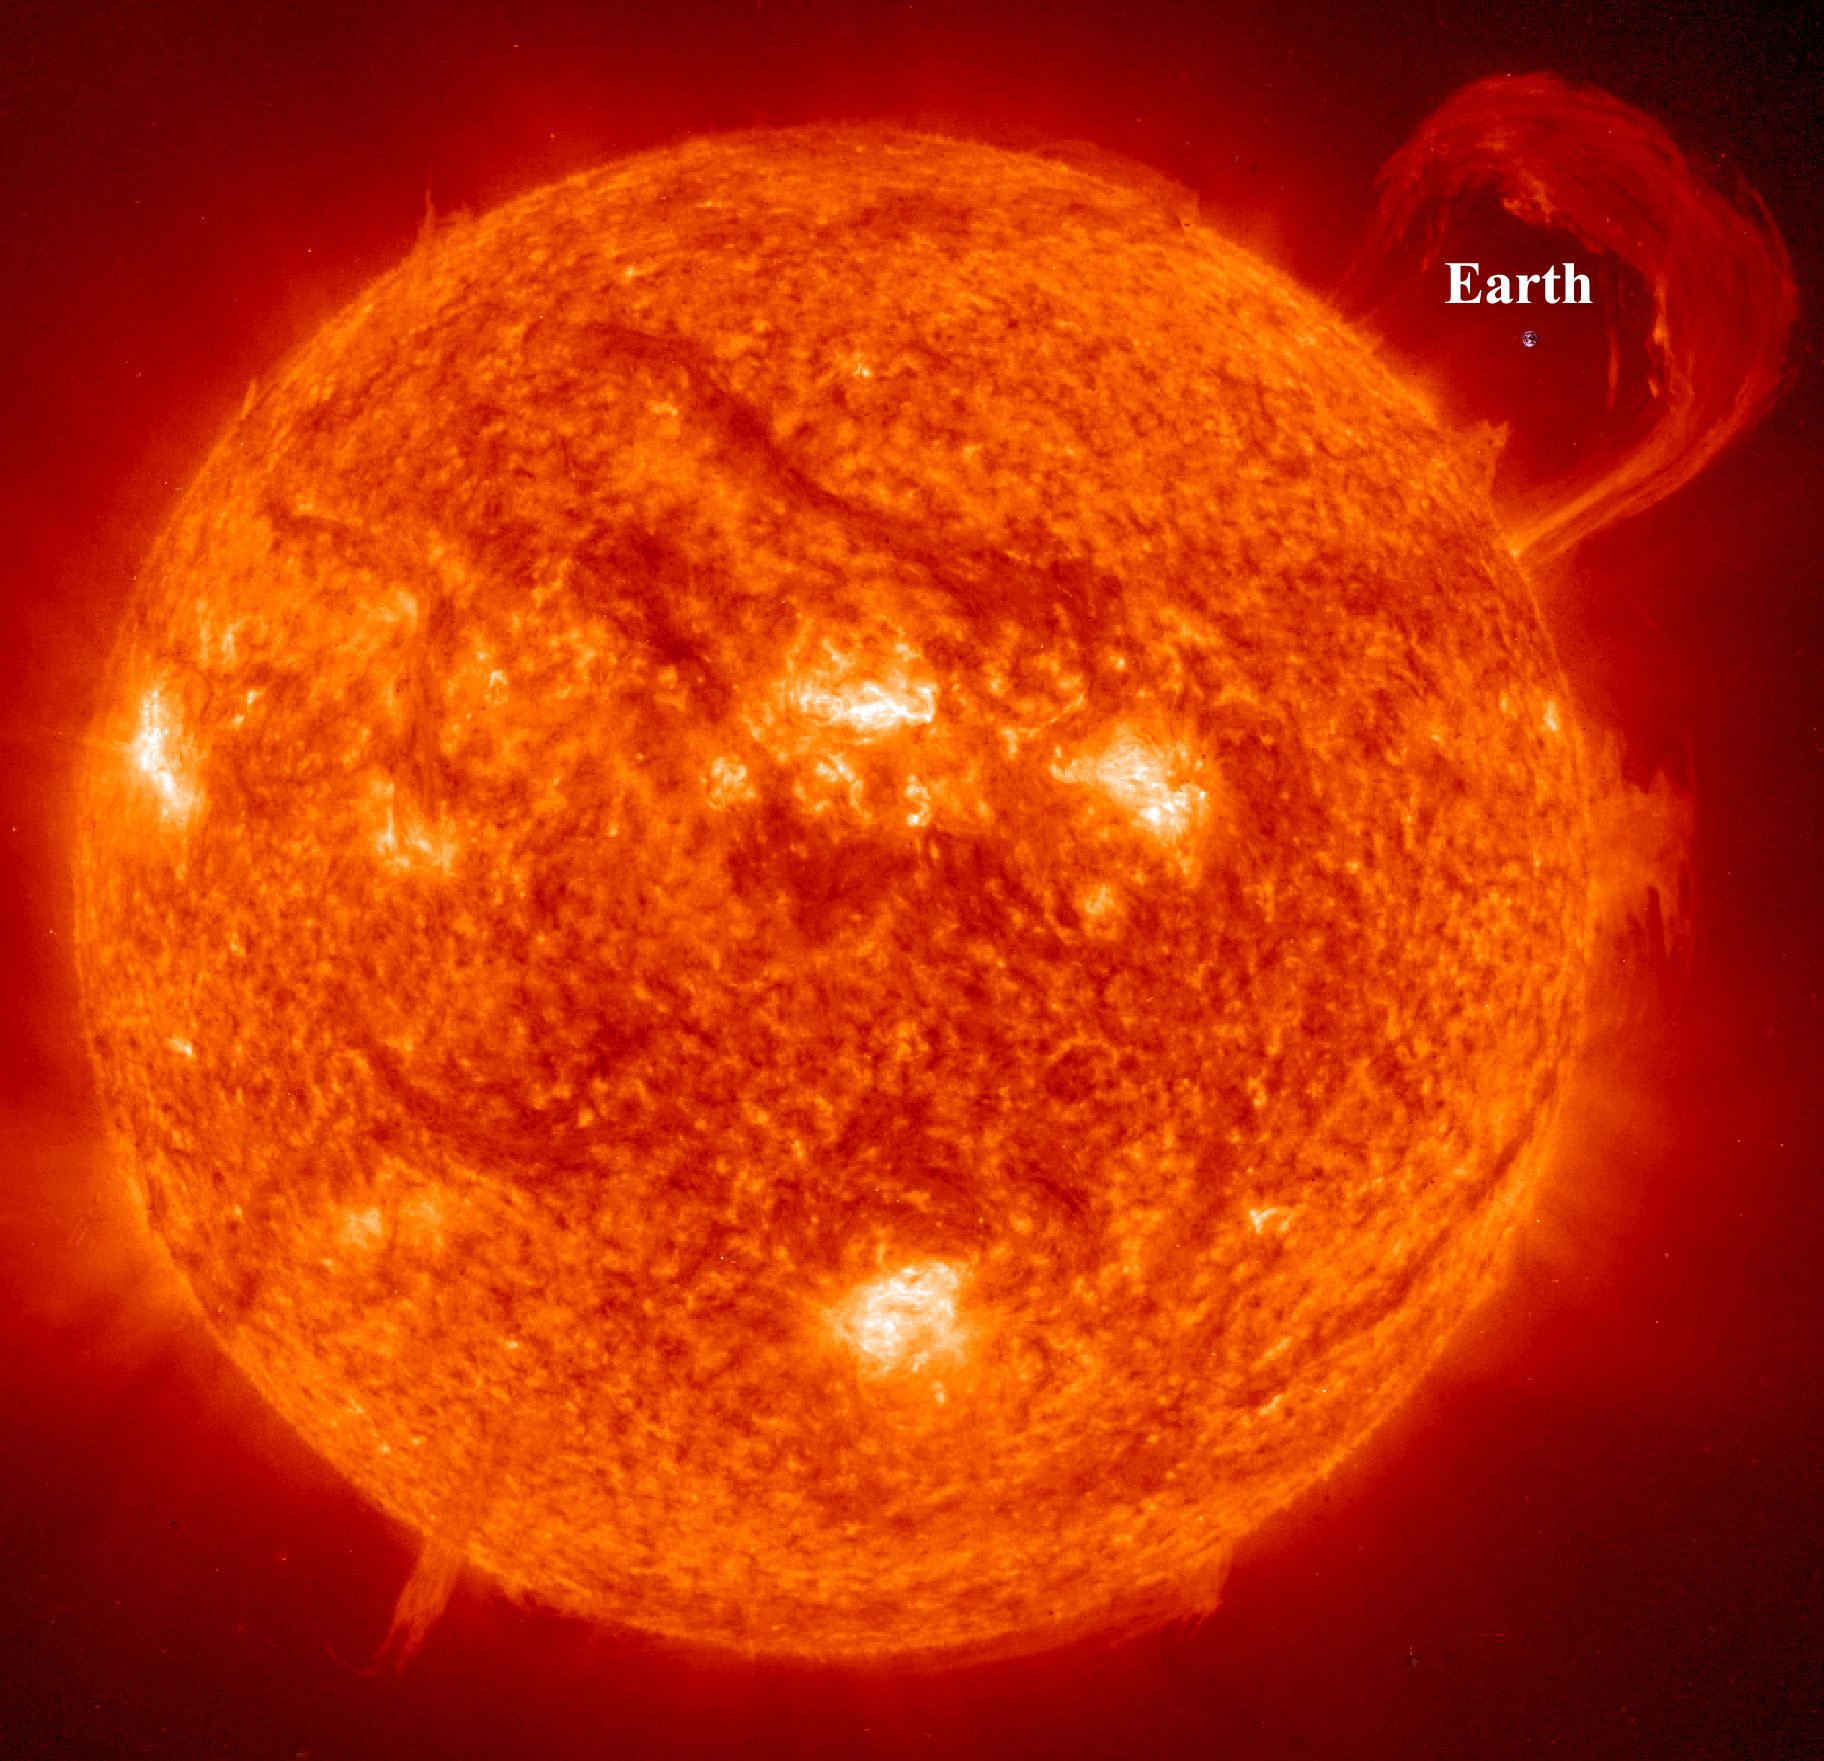 Earth Compared to the Sun. Image credit: NASA